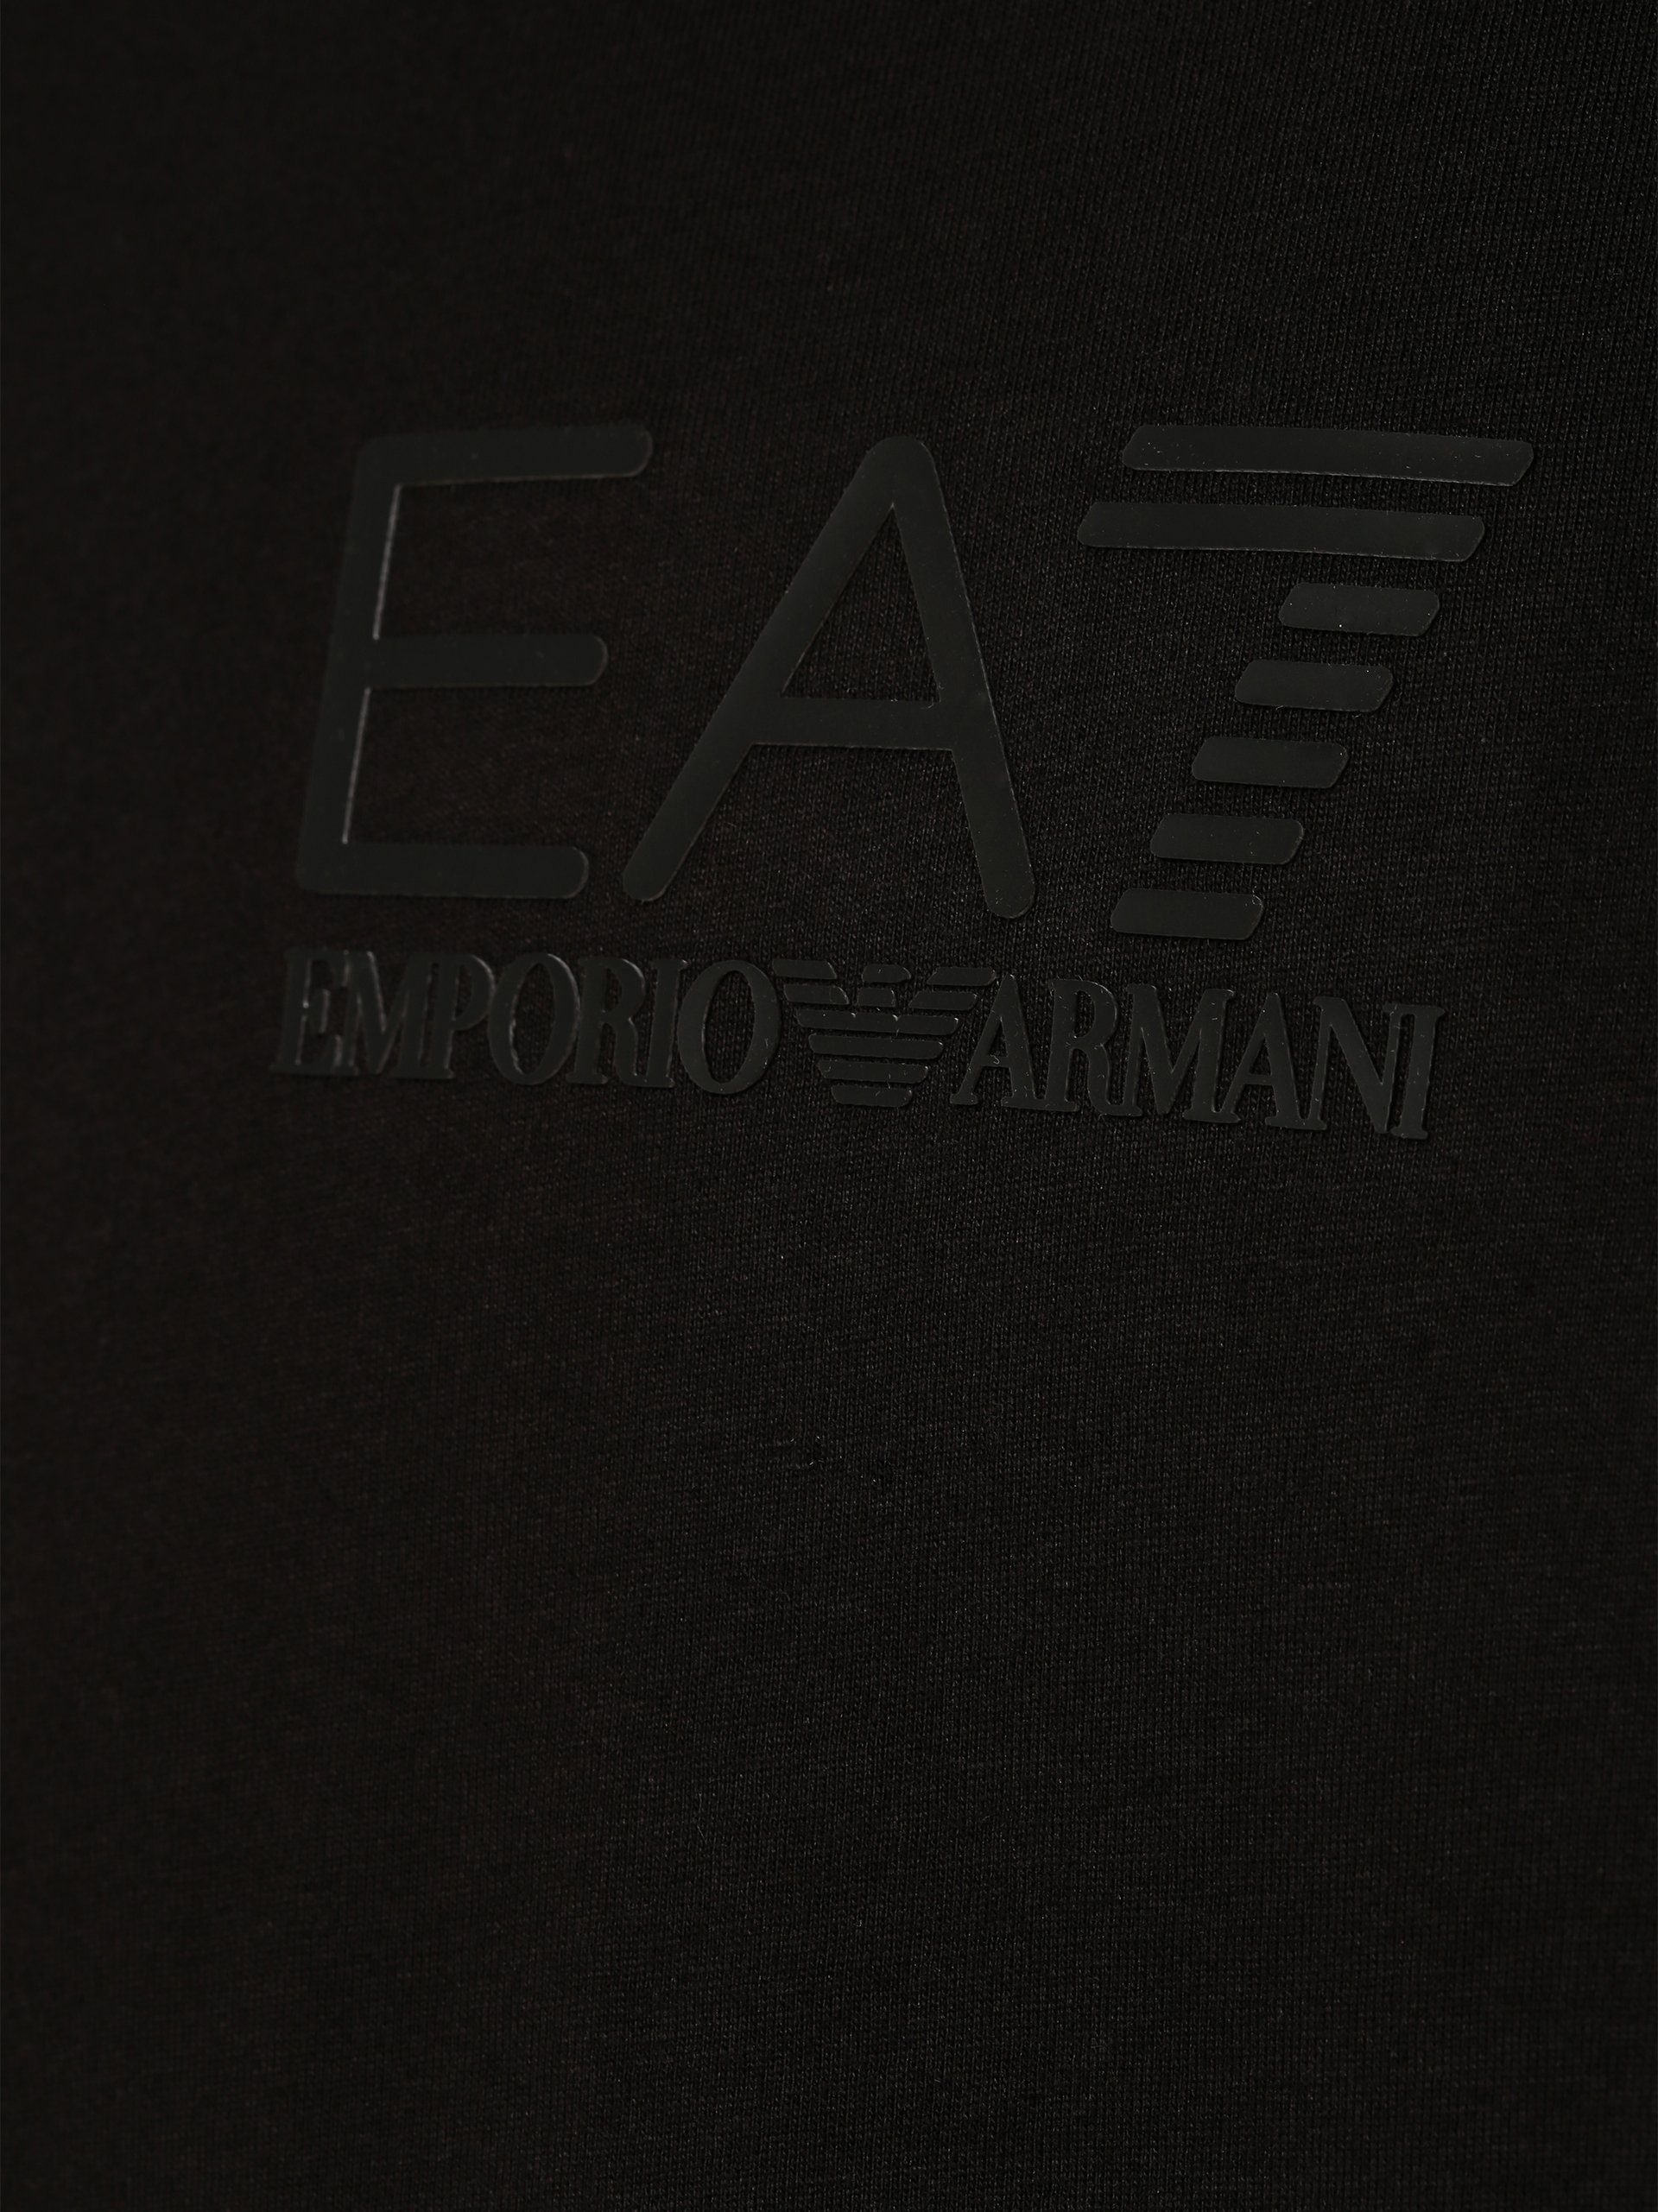 Emporio Armani T-Shirt schwarz grau